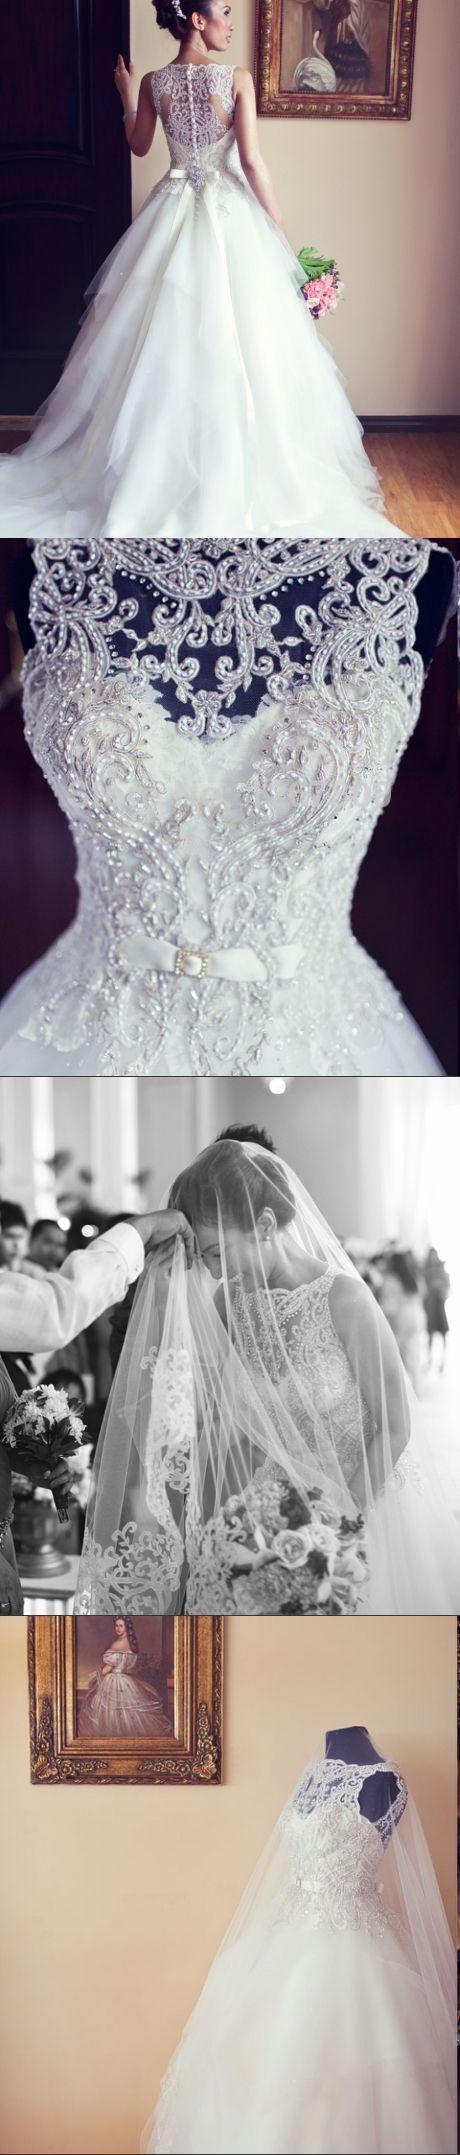 زفاف - Flare White Wedding Dress,Beading Sleeveless Bridal Dress,See Through Back Wedding Dress